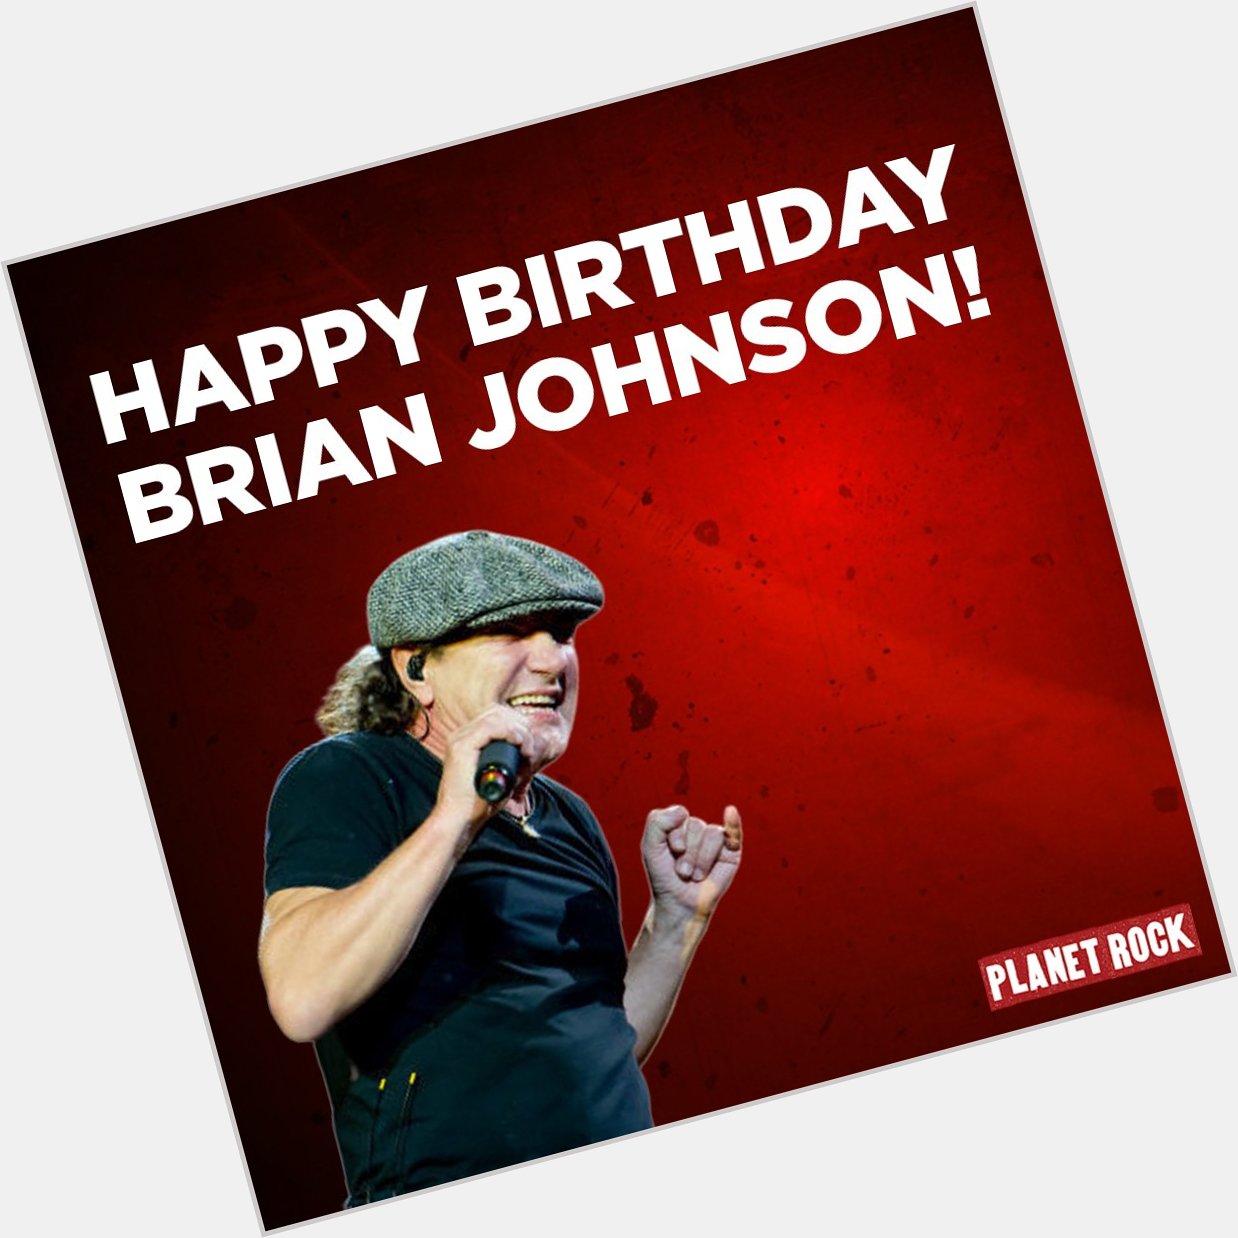 Happy birthday to AC/DC frontman, Brian Johnson! 